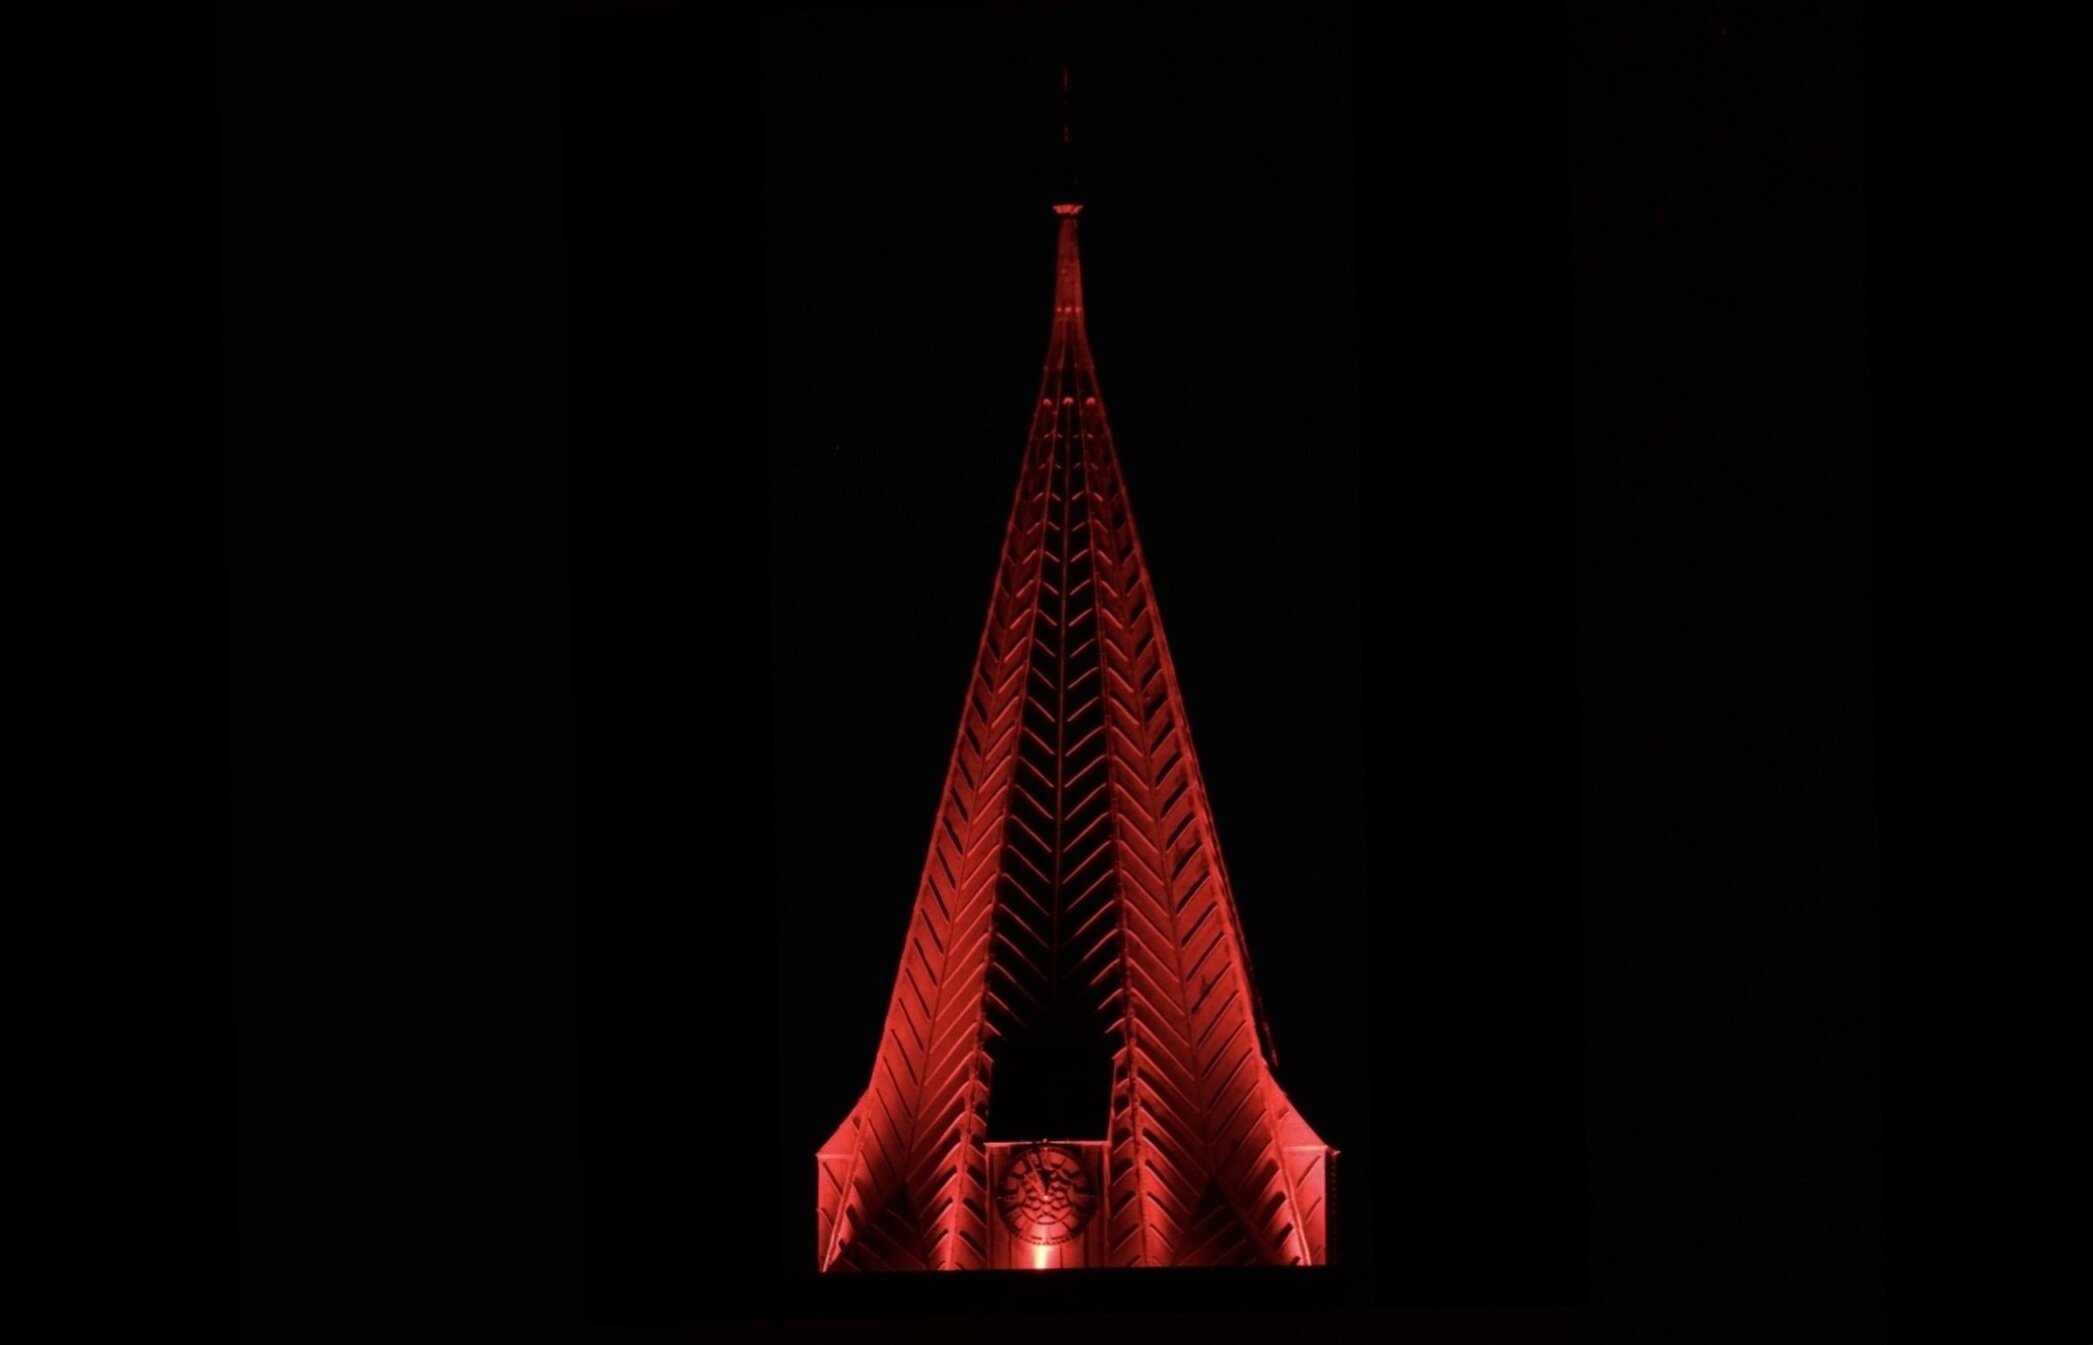 2020-05-08_red_spire.jpg